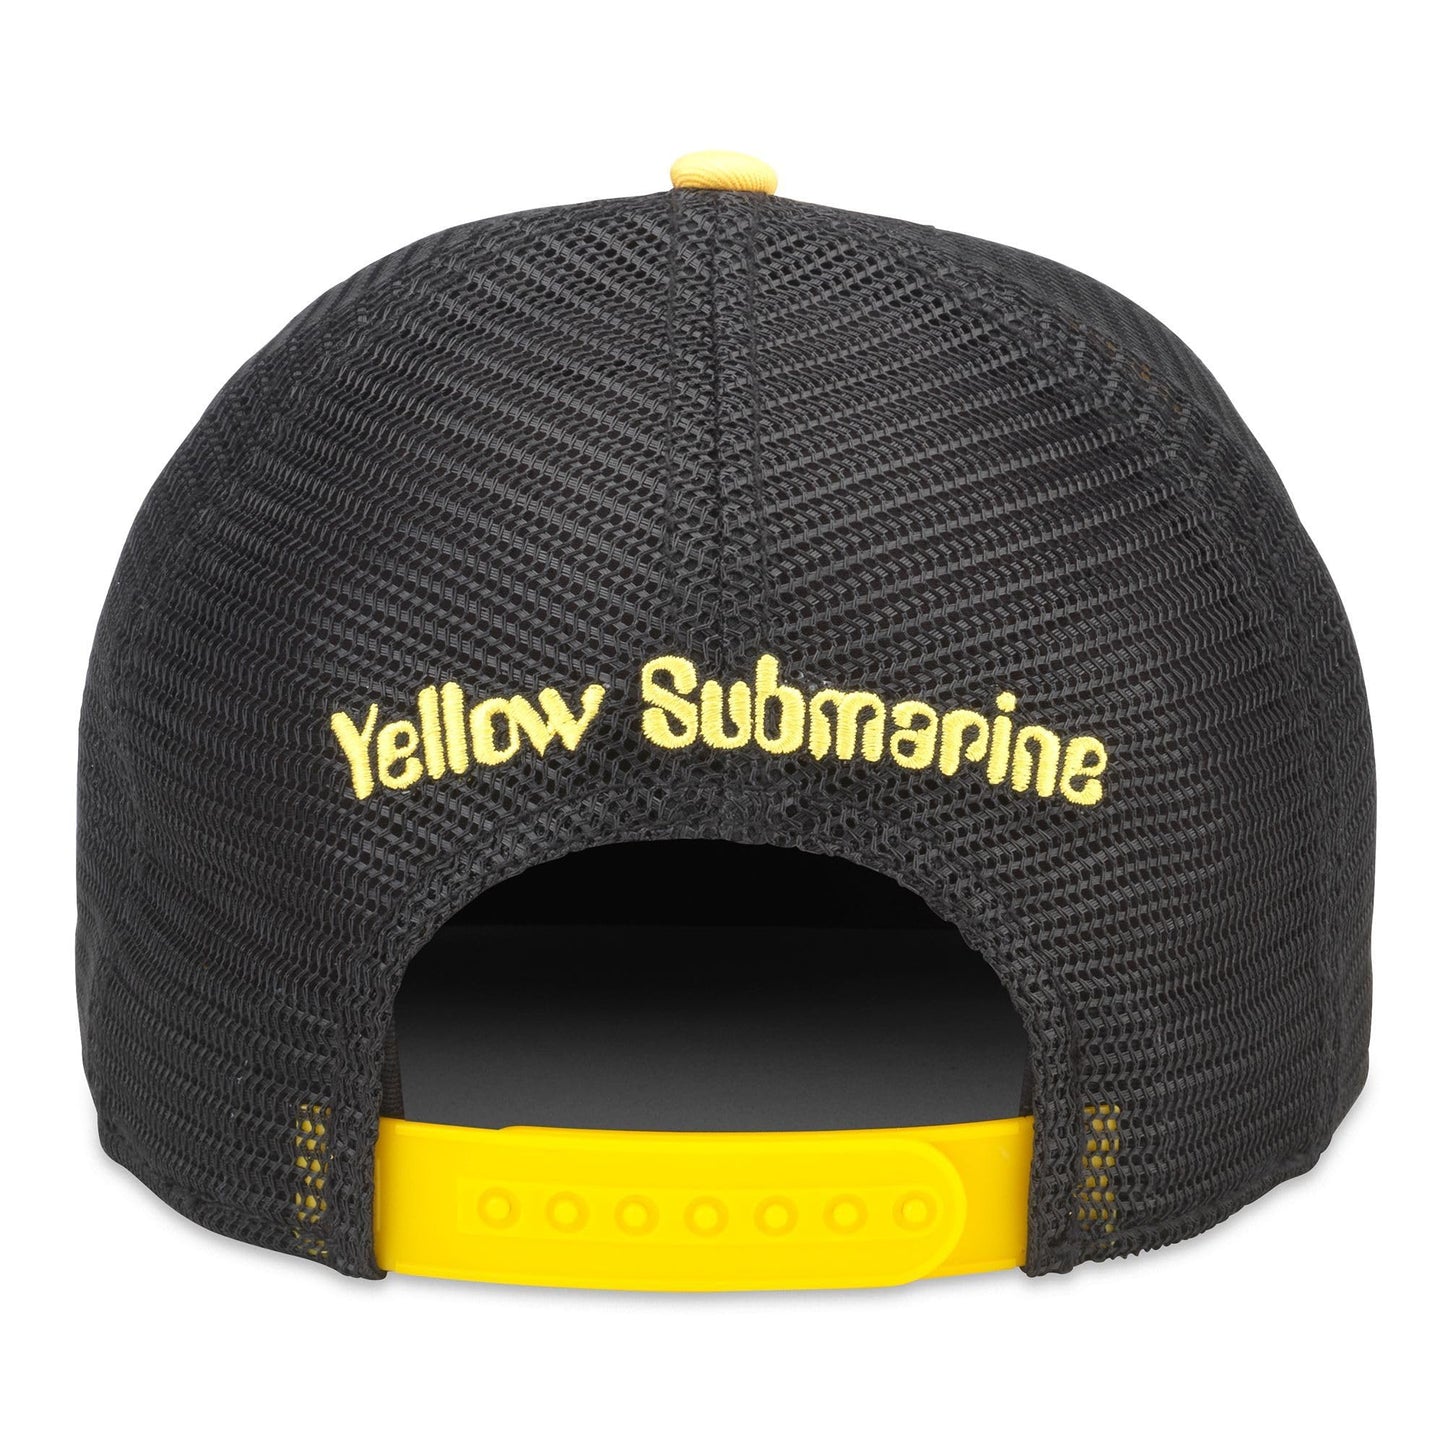 AMERICAN NEEDLE The Beatles Yellow Submarine Sinclair Adjustable Snapback Baseball Hat, Black/Ivory/Yellow (21001A-YESUB-BKIVYE)